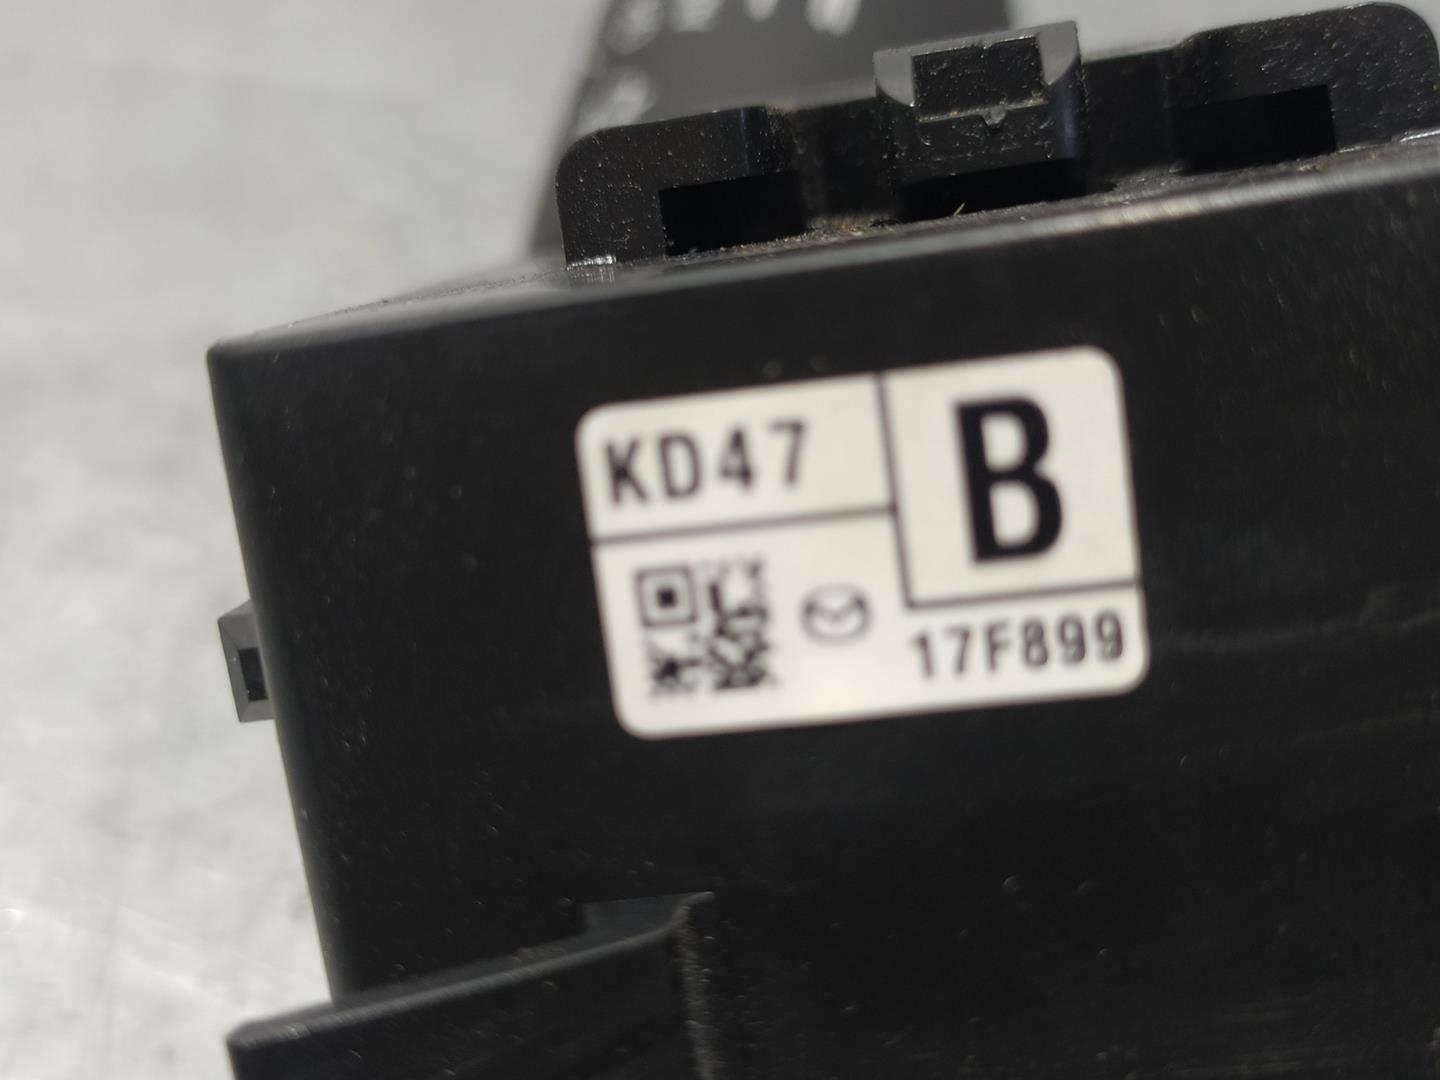 MAZDA 3 BM (2013-2019) Indicator Wiper Stalk Switch 17F899 24039295